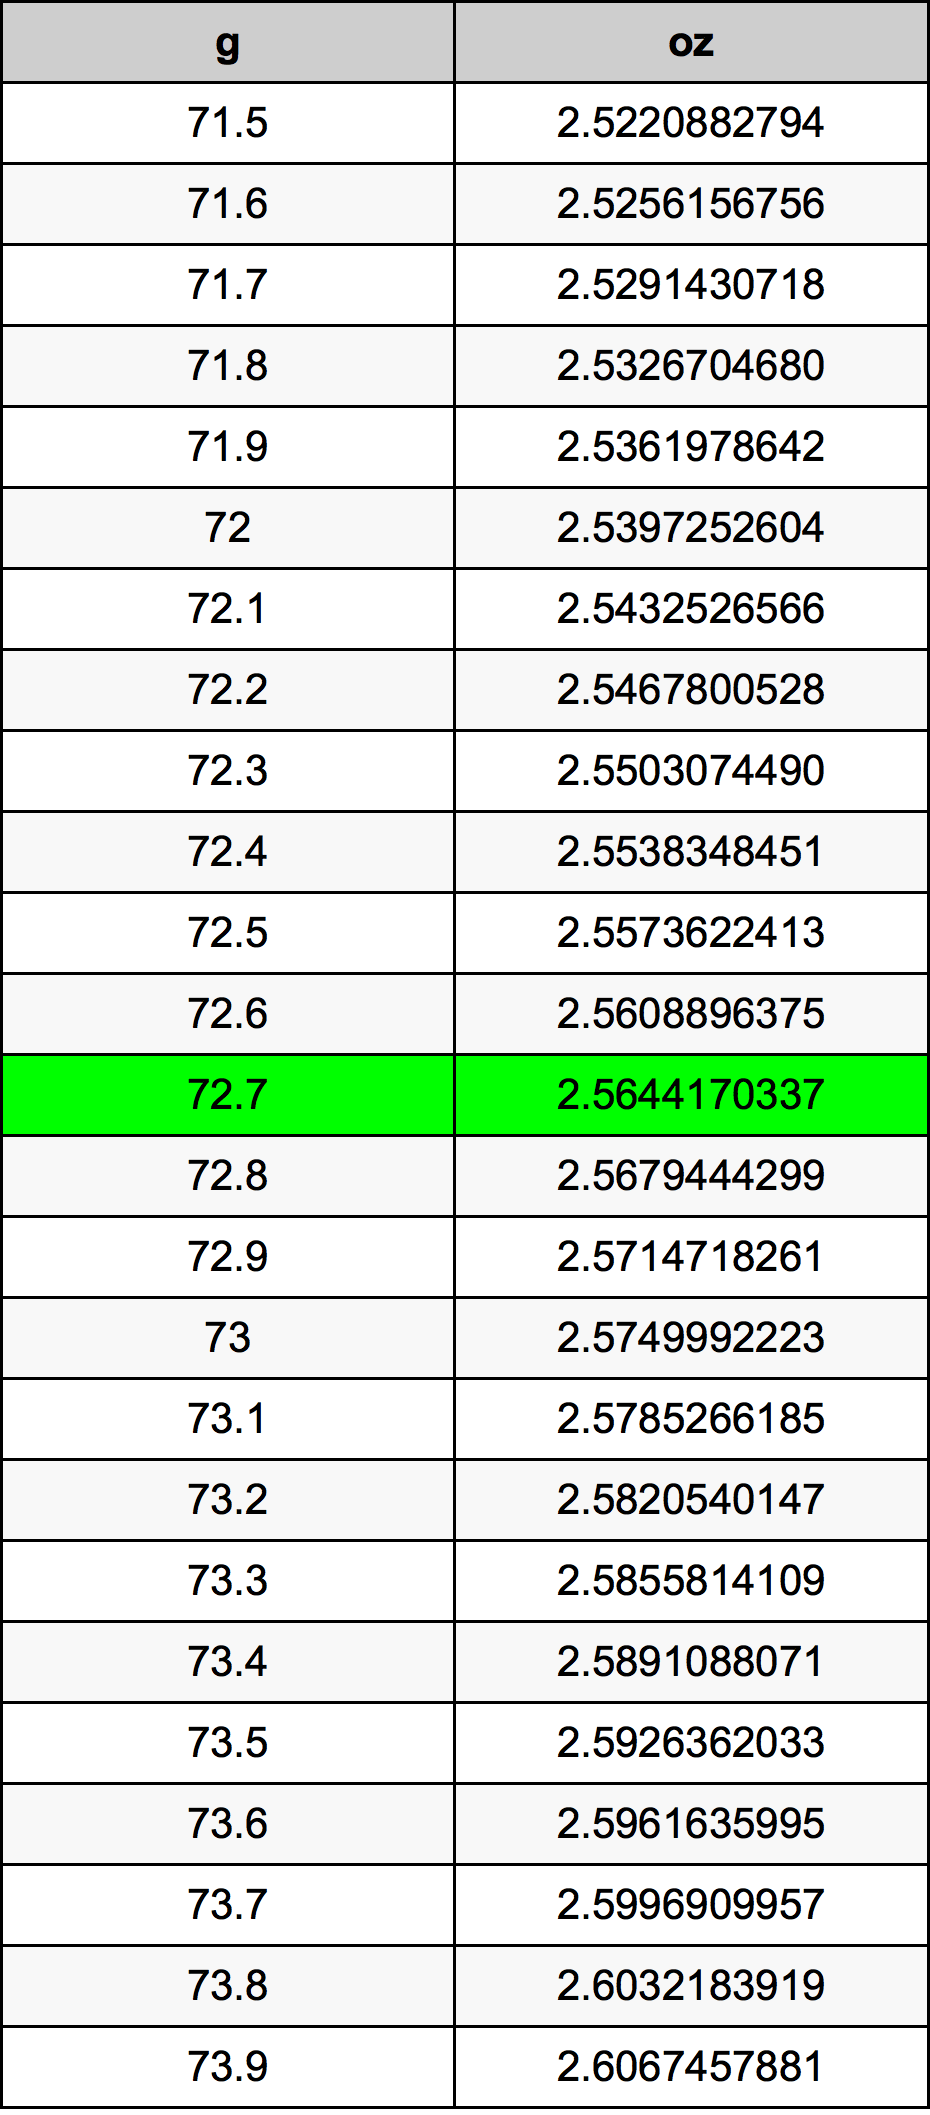 72.7 غرام جدول تحويل